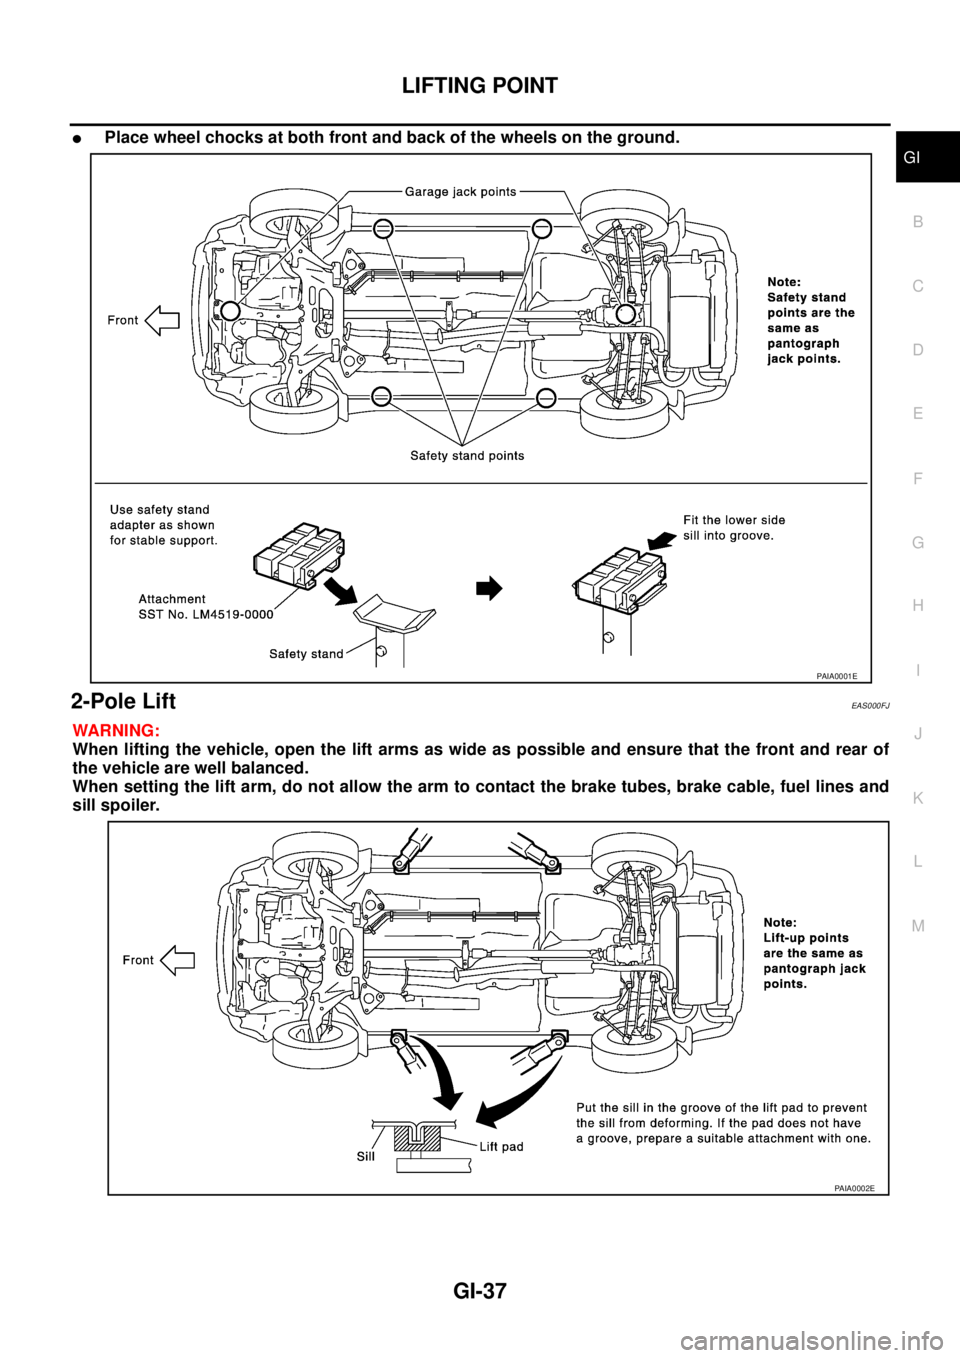 NISSAN X-TRAIL 2003  Service Repair Manual LIFTING POINT
GI-37
C
D
E
F
G
H
I
J
K
L
MB
GI
 
Place wheel chocks at both front and back of the wheels on the ground.
2-Pole Lift EAS000FJ
WARNING:
When lifting the vehicle, open the lift arms as wi